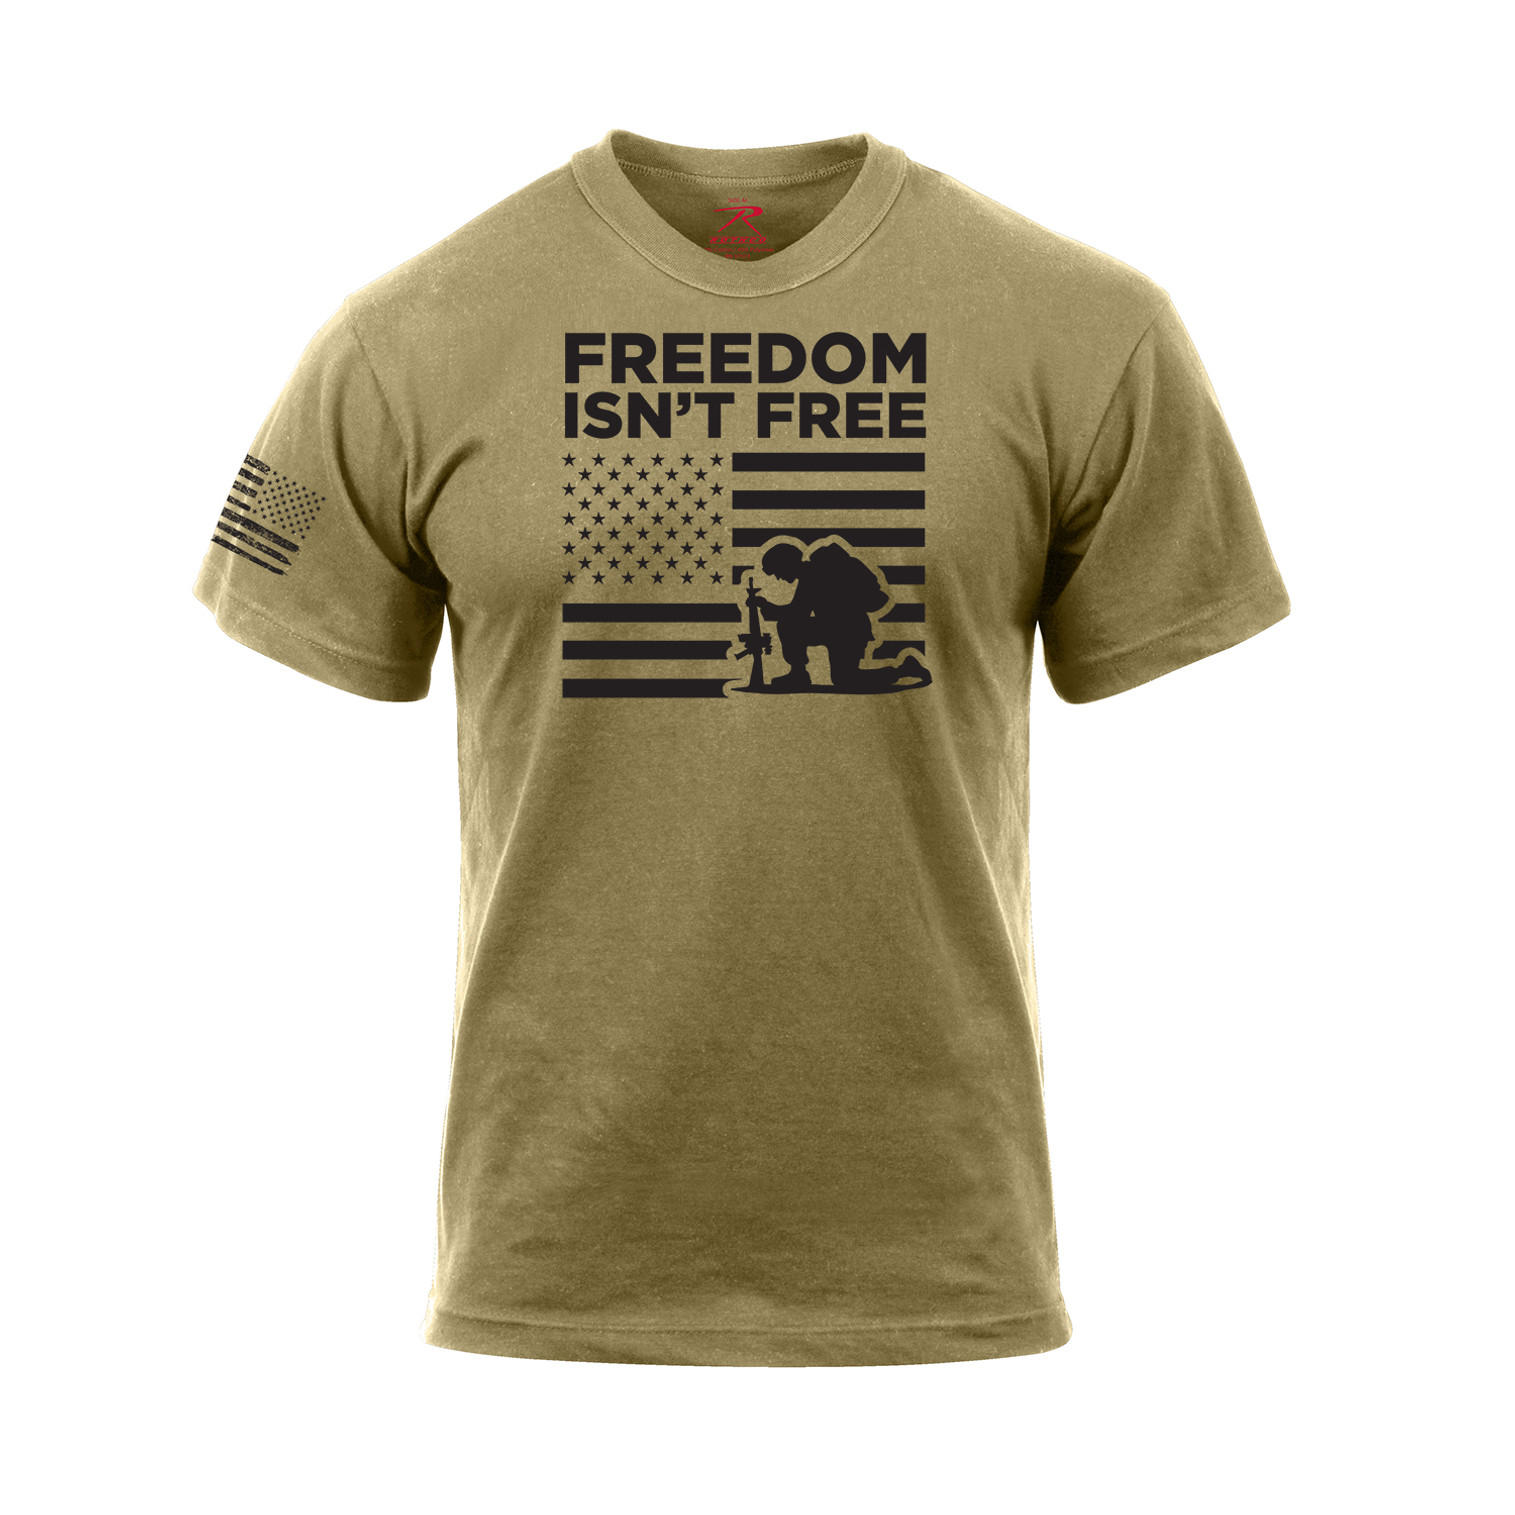 Rothco "Freedom Isn't Free" T-Shirt - Coyote Brown